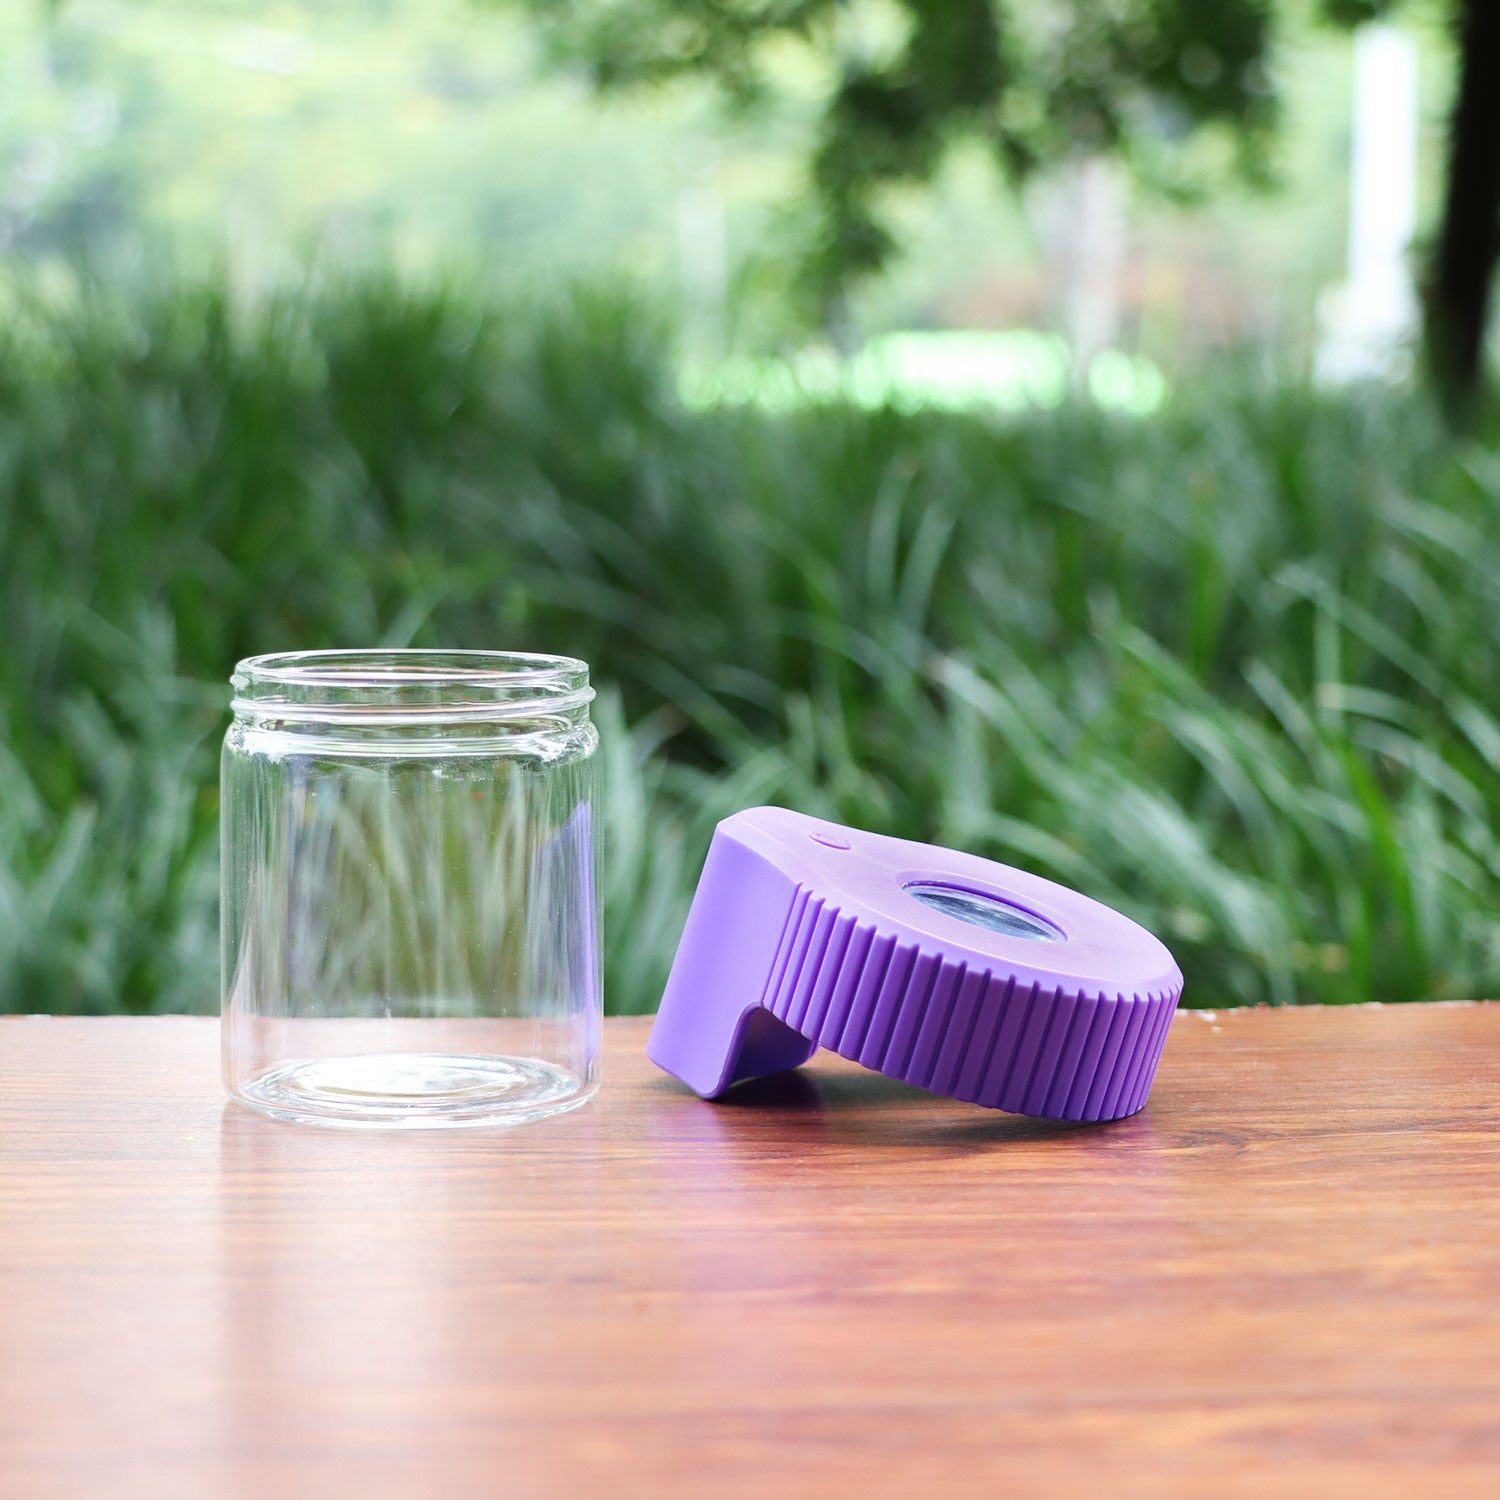 HORNET Light-Up Led Glass Storage Jar, Air Tight & Magnifying View Jar, Purple Color Jar Lid, Rechargeable Glass Jar